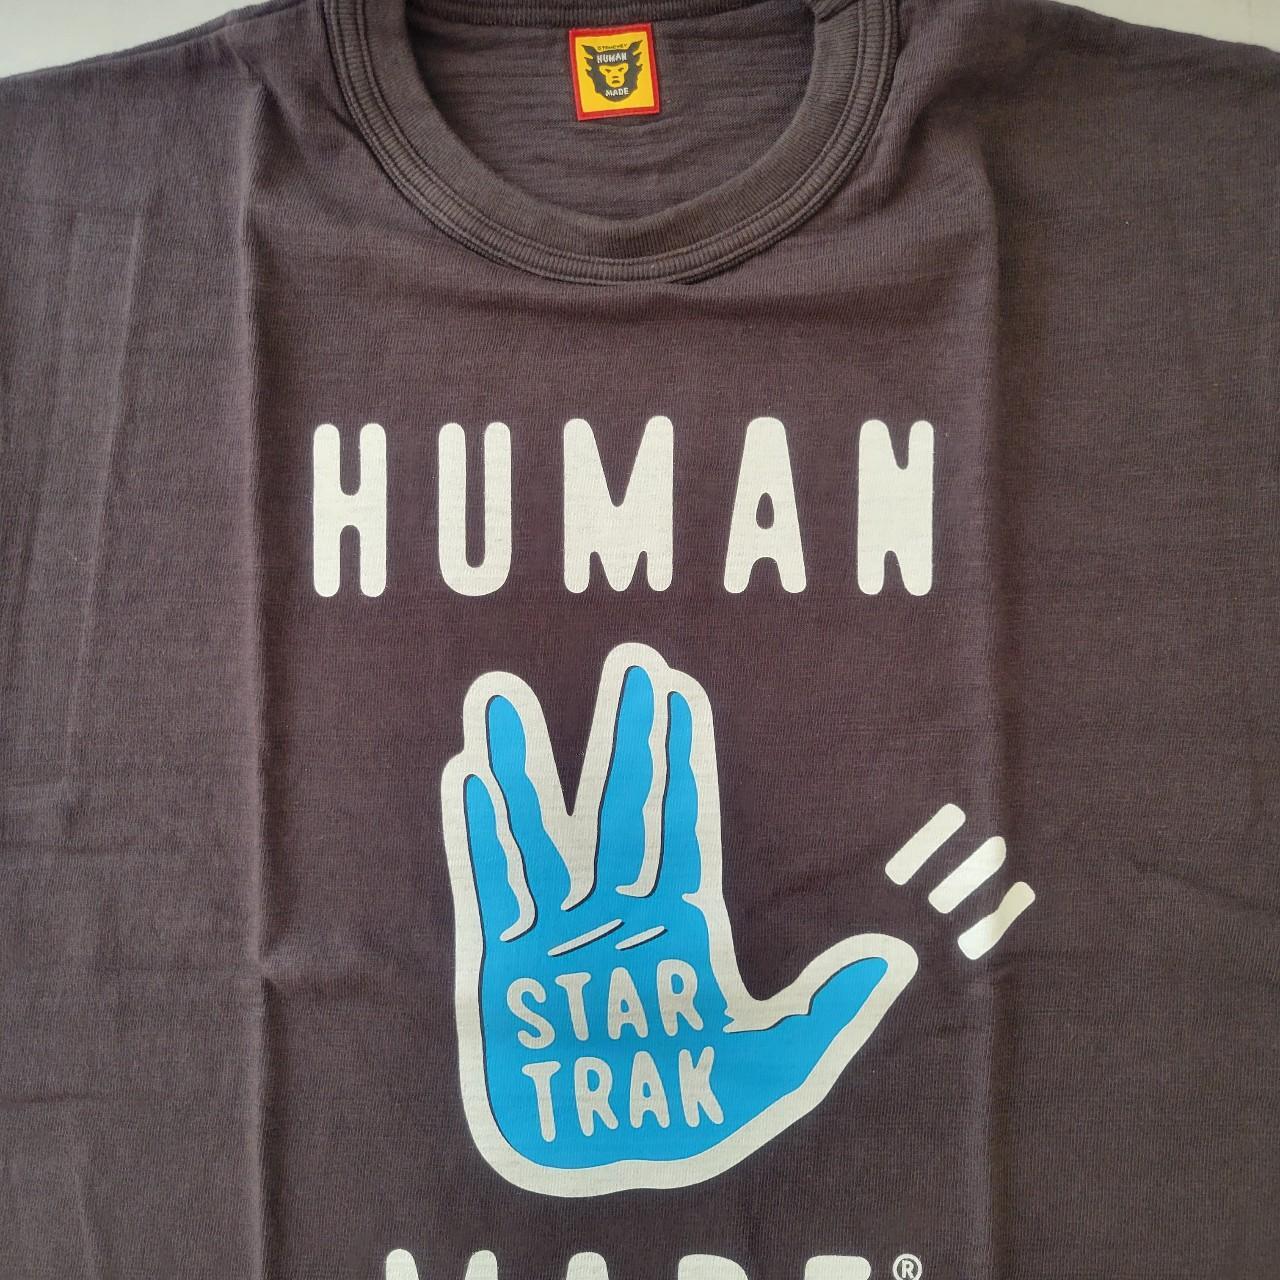 Product Image 3 - NEW
Human Made
Mens L
Star Trak 
Black

#humanmade
#startrak
#deadstock
C2